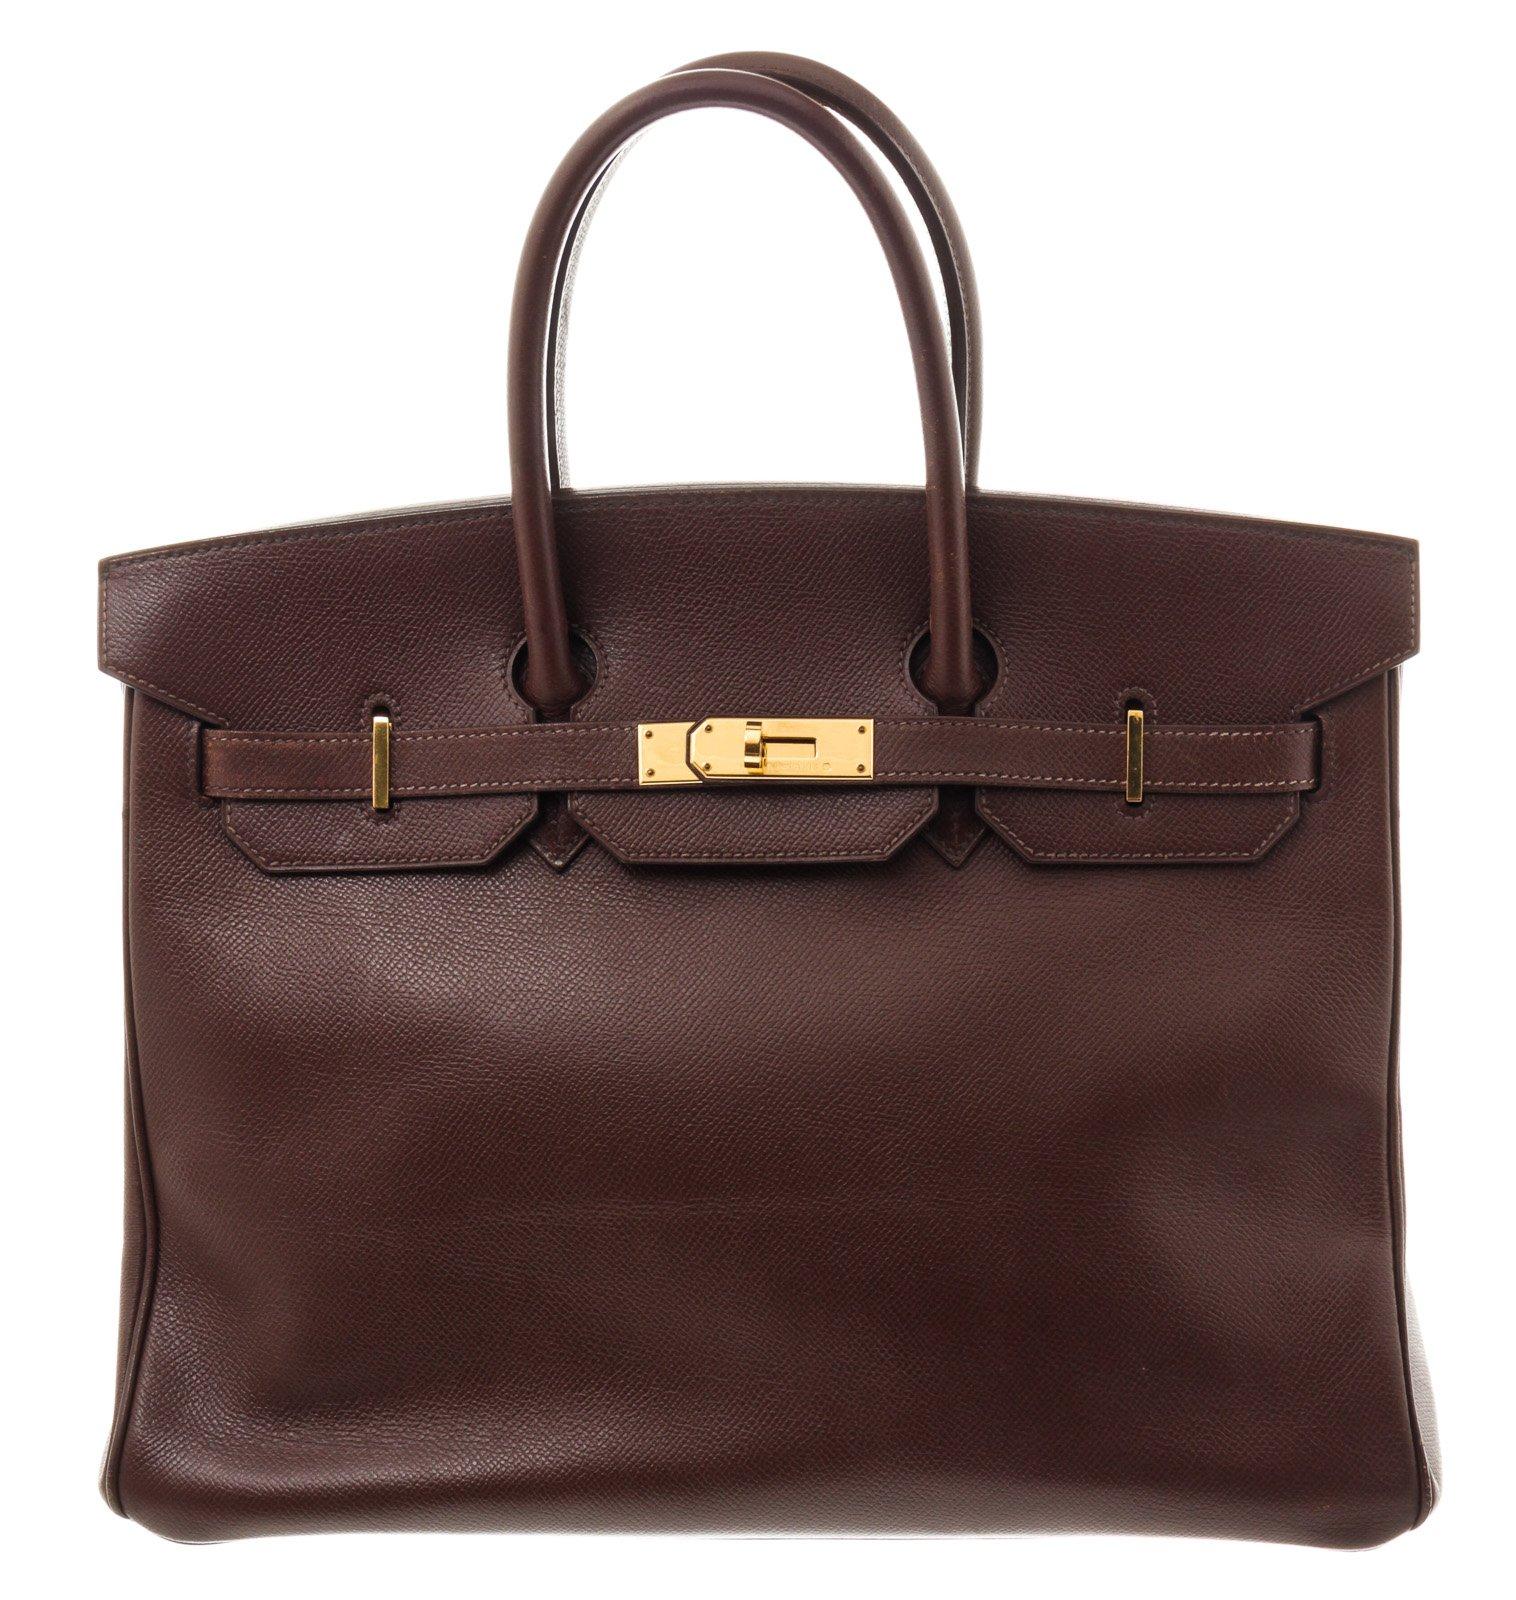 Hermes Brown Leather Birkin 35cm Satchel Bag